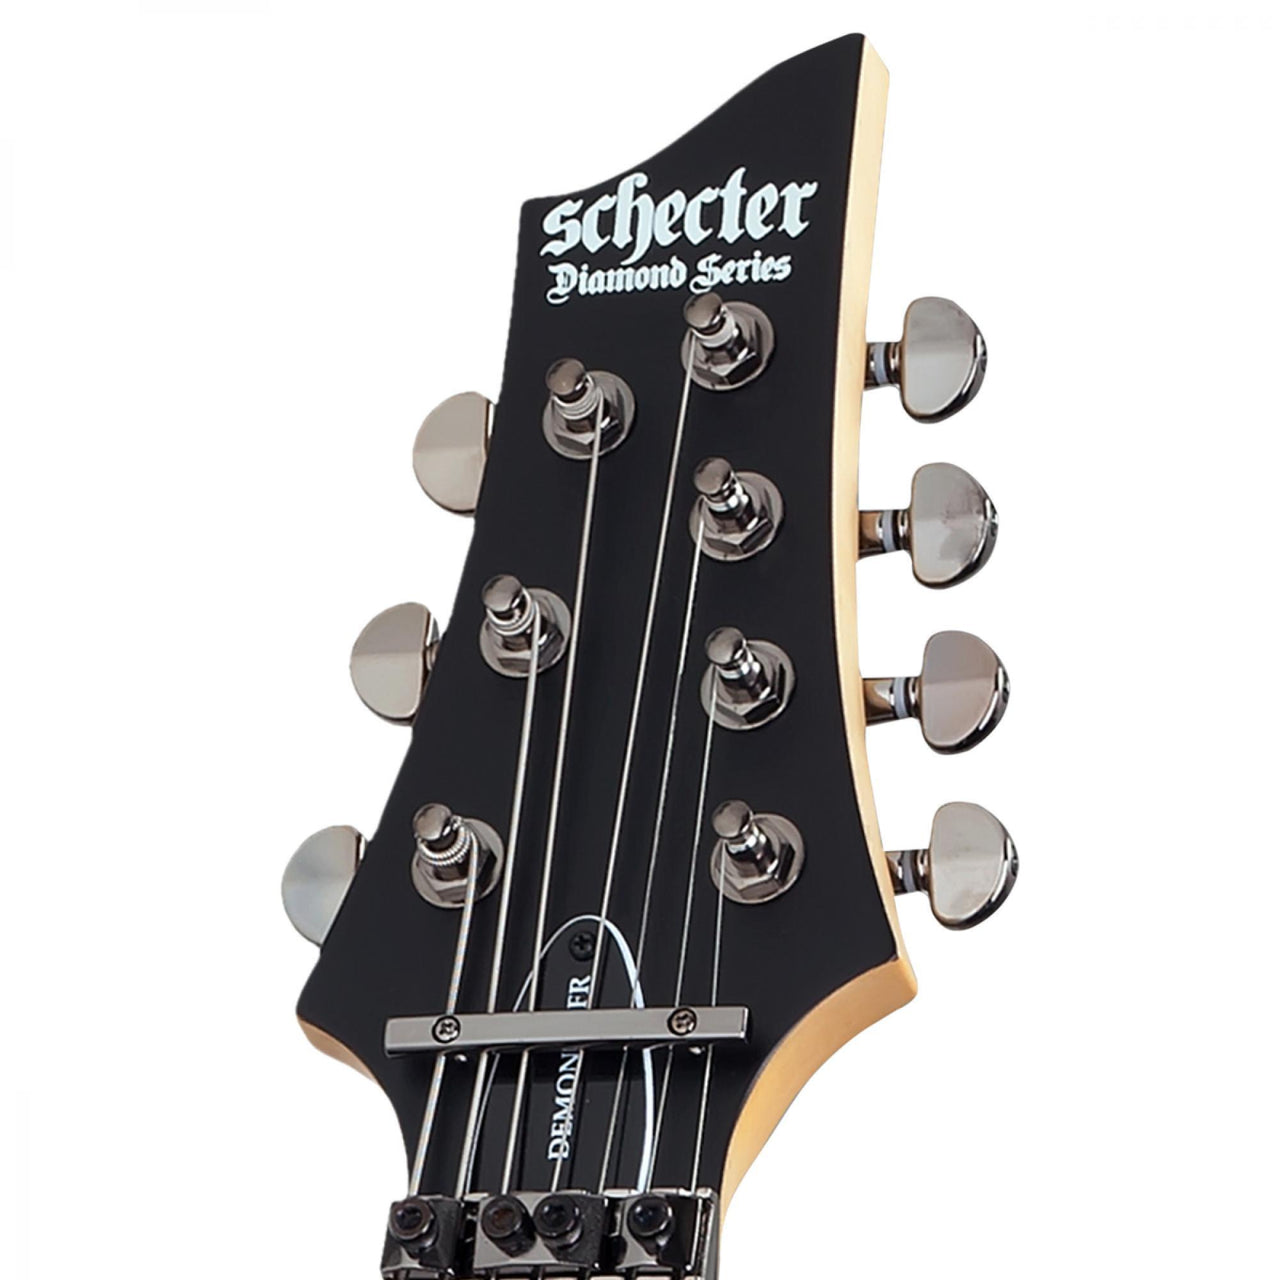 Guitarra Schecter Demon-7 Fr Crb Electrica Series Damon